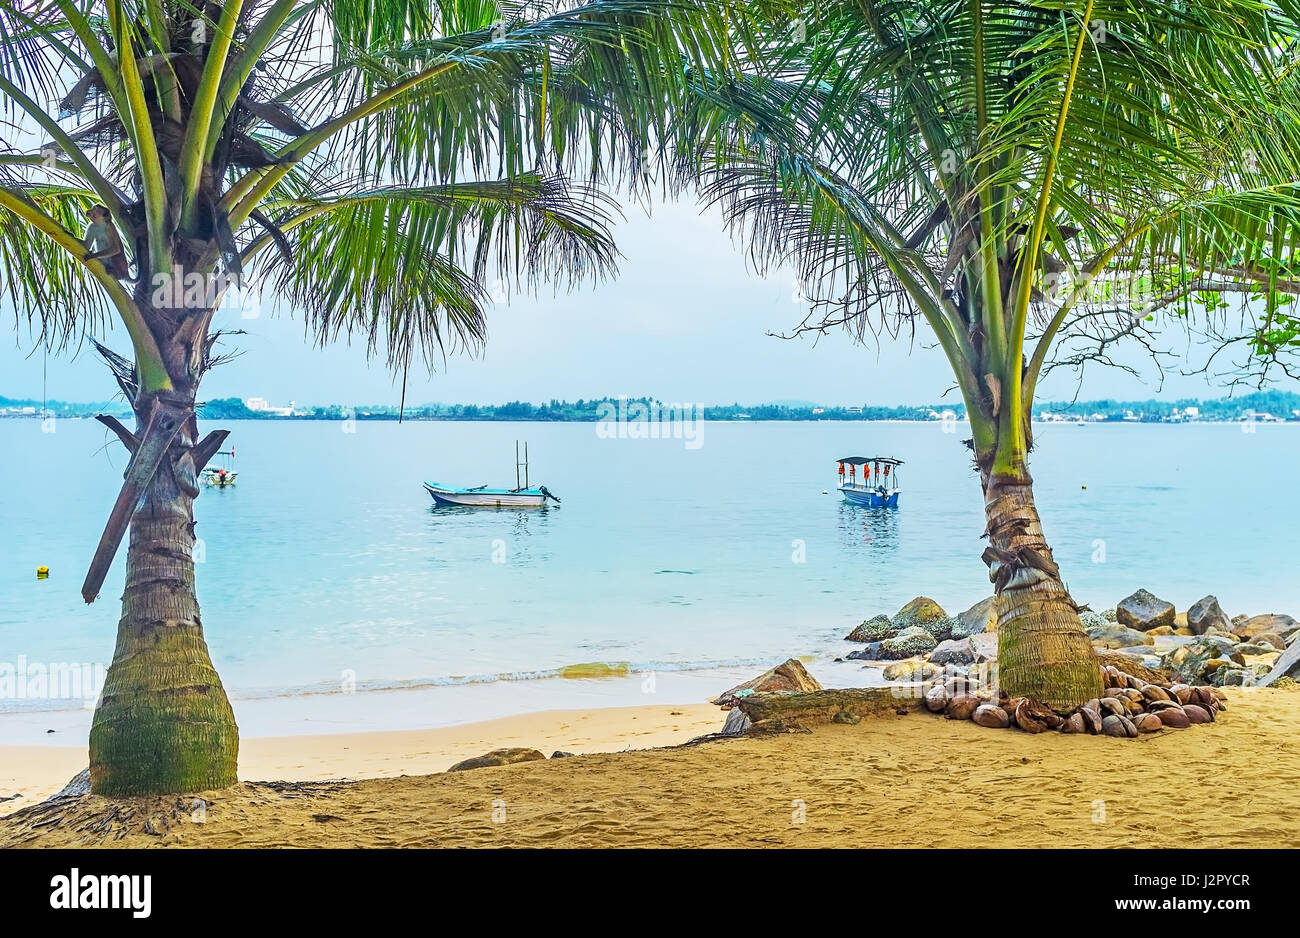 The view on the shore of Jungle Beach with pleasure boats through the shady palms on the sand, Unawatuna, Sri Lanka. Stock Photo